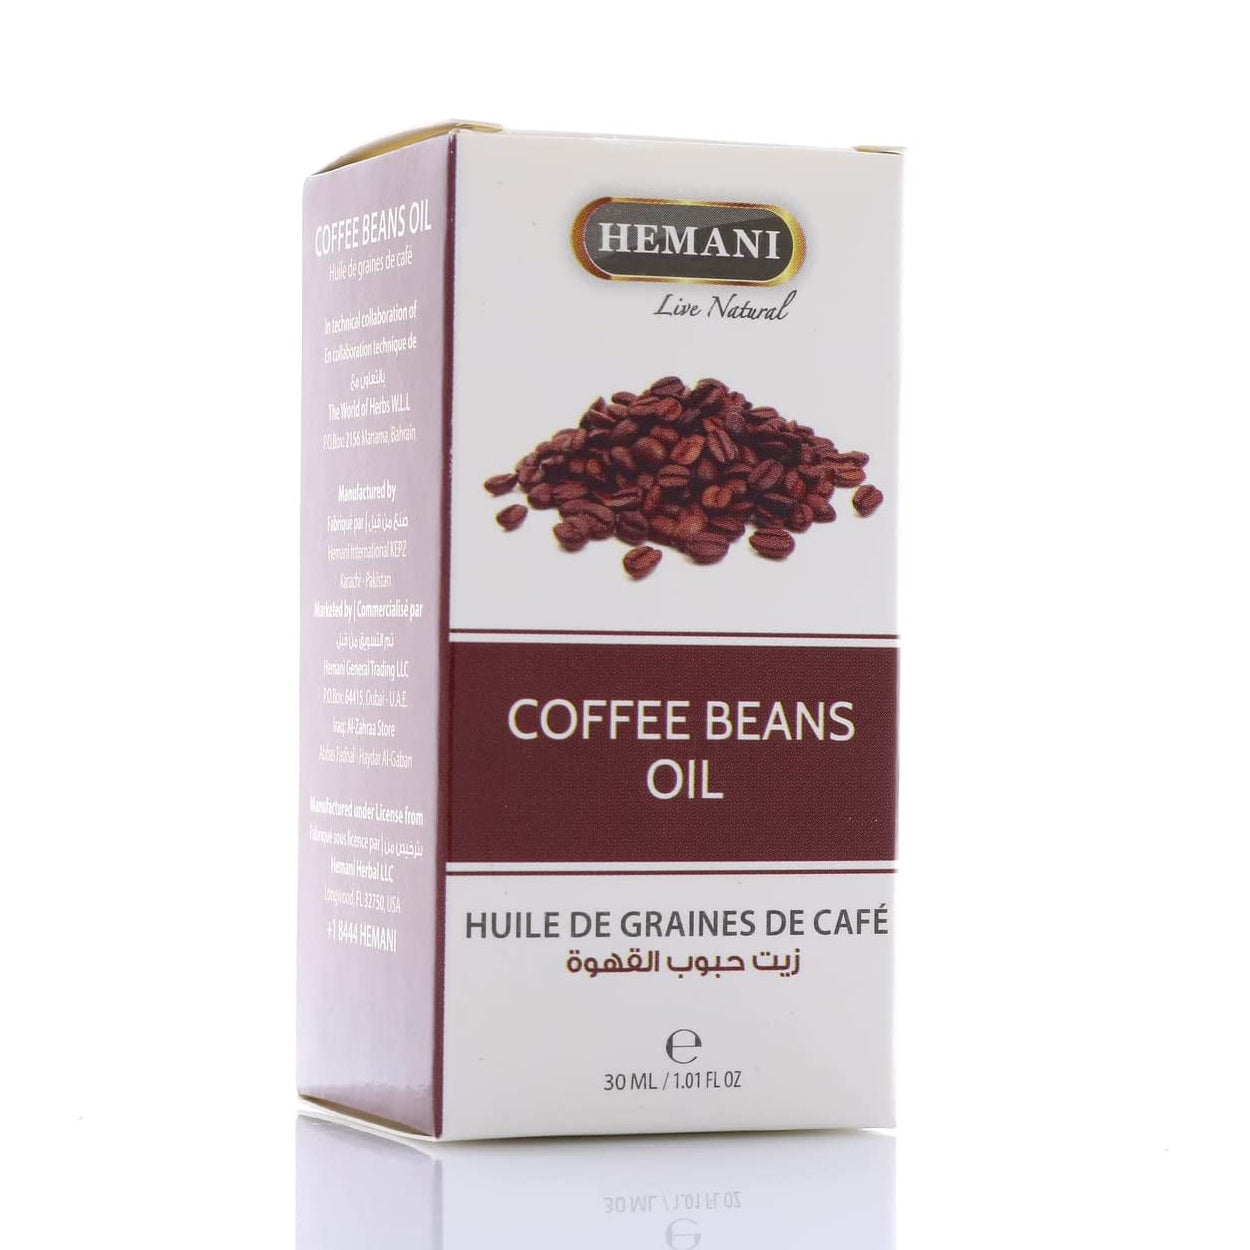 Hemani Coffee Beans Oil, 30 ml